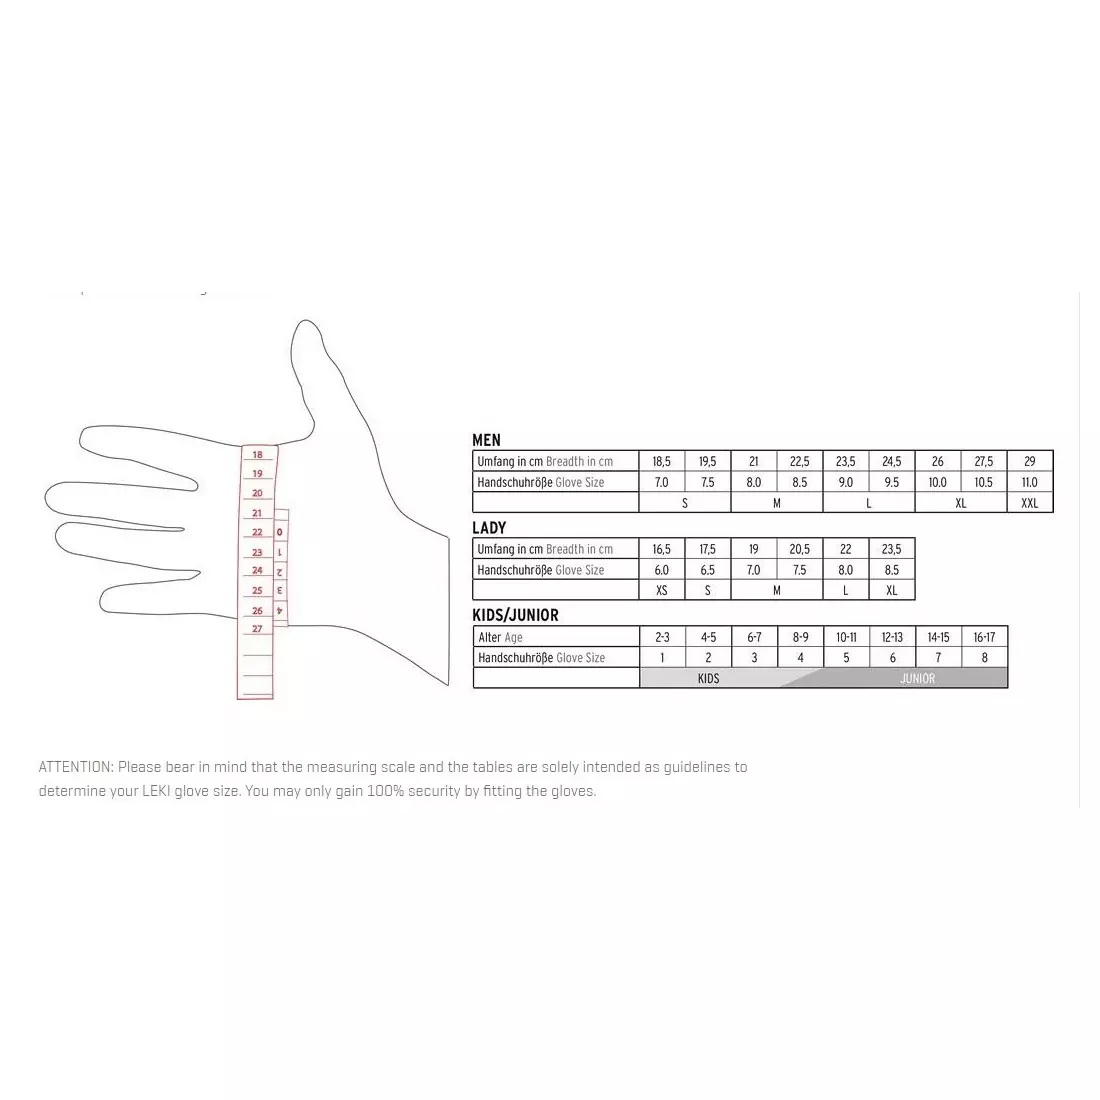 LEKI Lyžařské rukavice Fusion S MF Touch, black, 643850301105